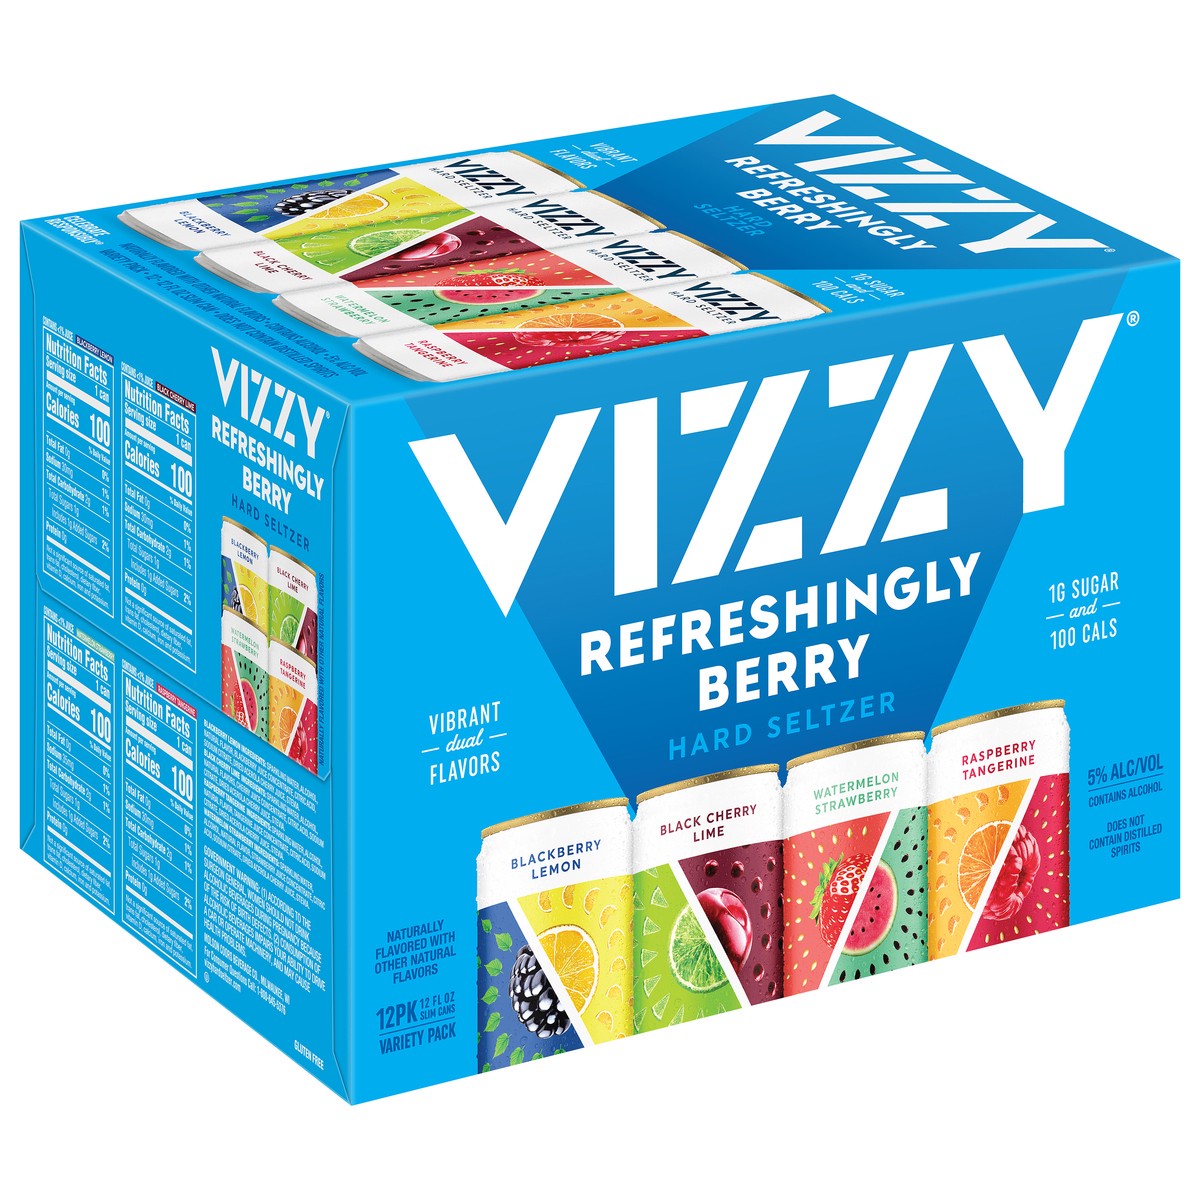 slide 9 of 9, Vizzy Variety Pack 2 Vizzy Hard Seltzer Berry Variety Pack, 12 Pack, 12 fl oz Cans, 5% ABV, 12 fl oz